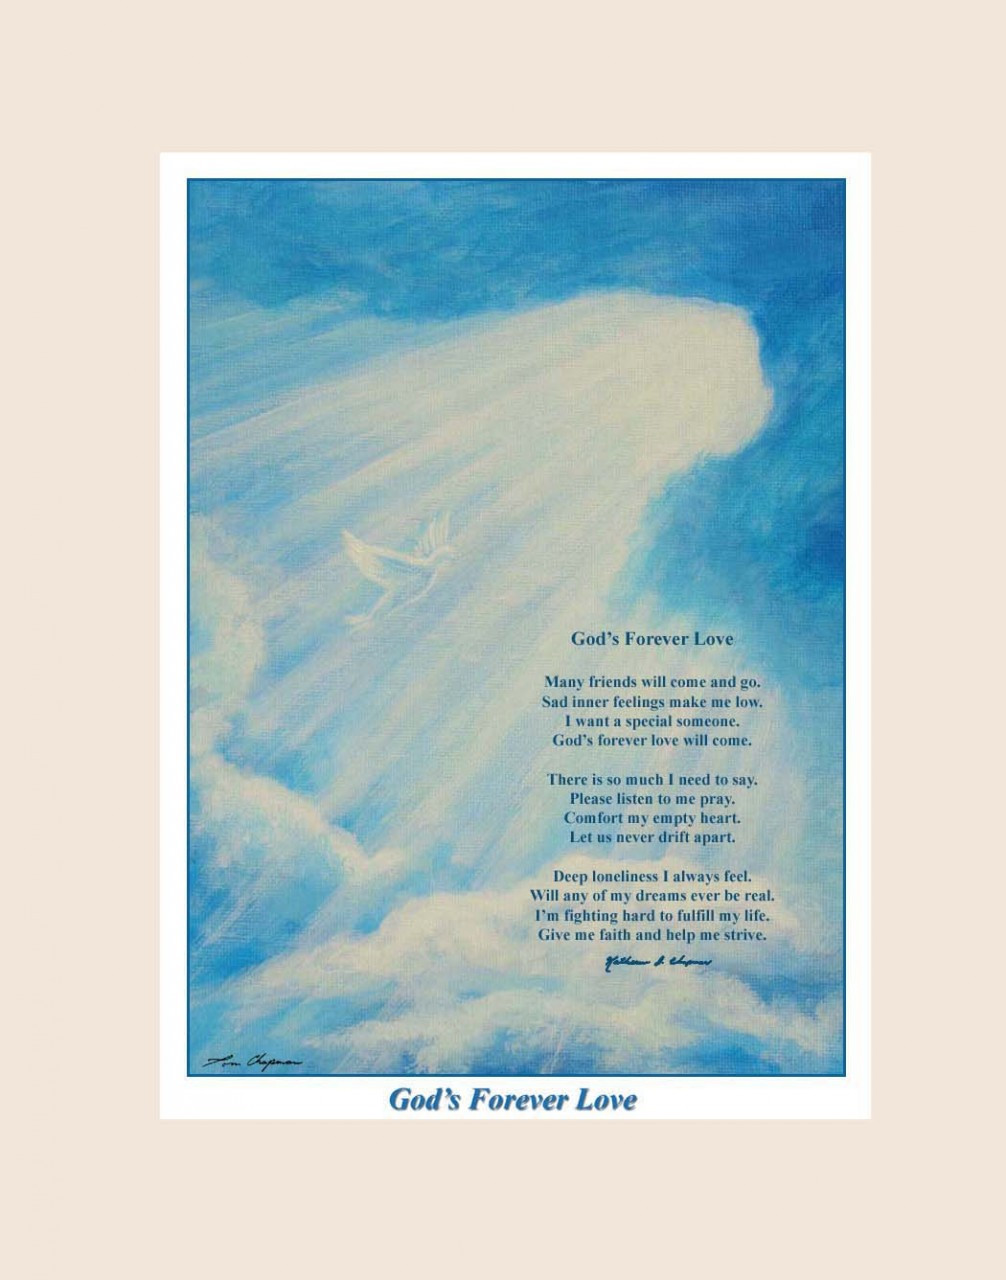 God's Forever Love, inspirational poem by Katherine Chapman